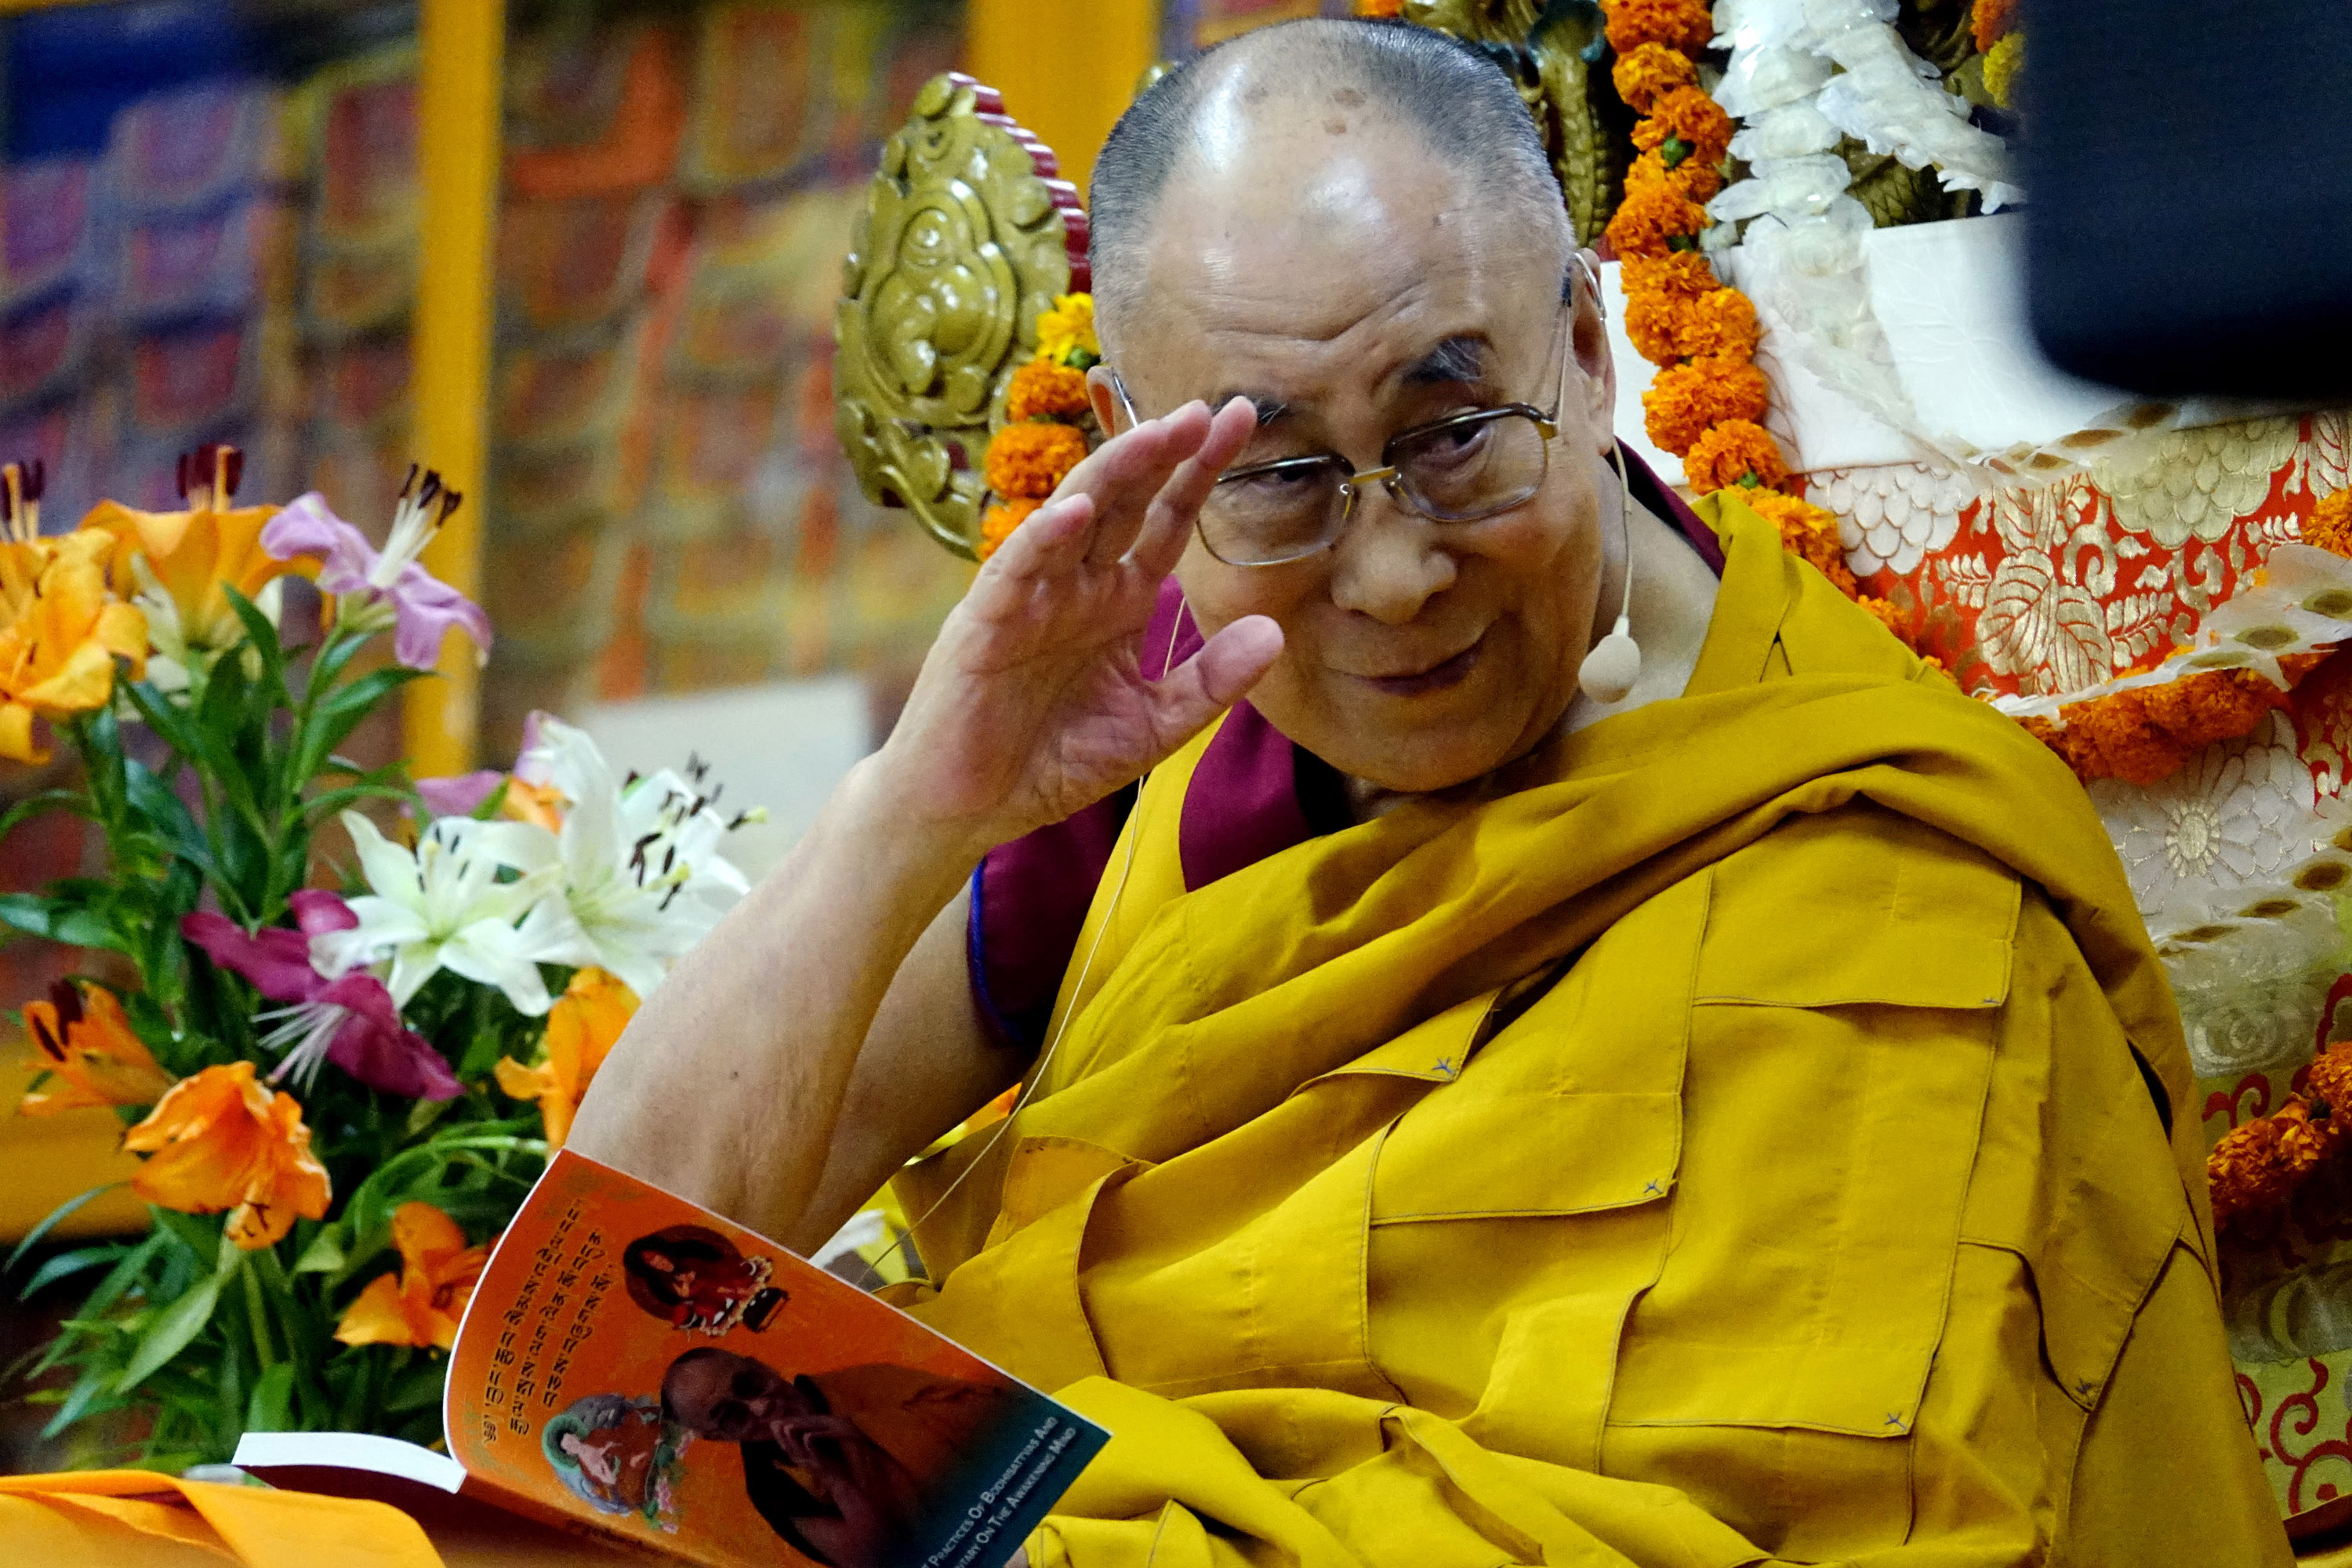 Tibetan Spiritual Leader The Dalai Lama Prays At The Tsuglakhang Temple